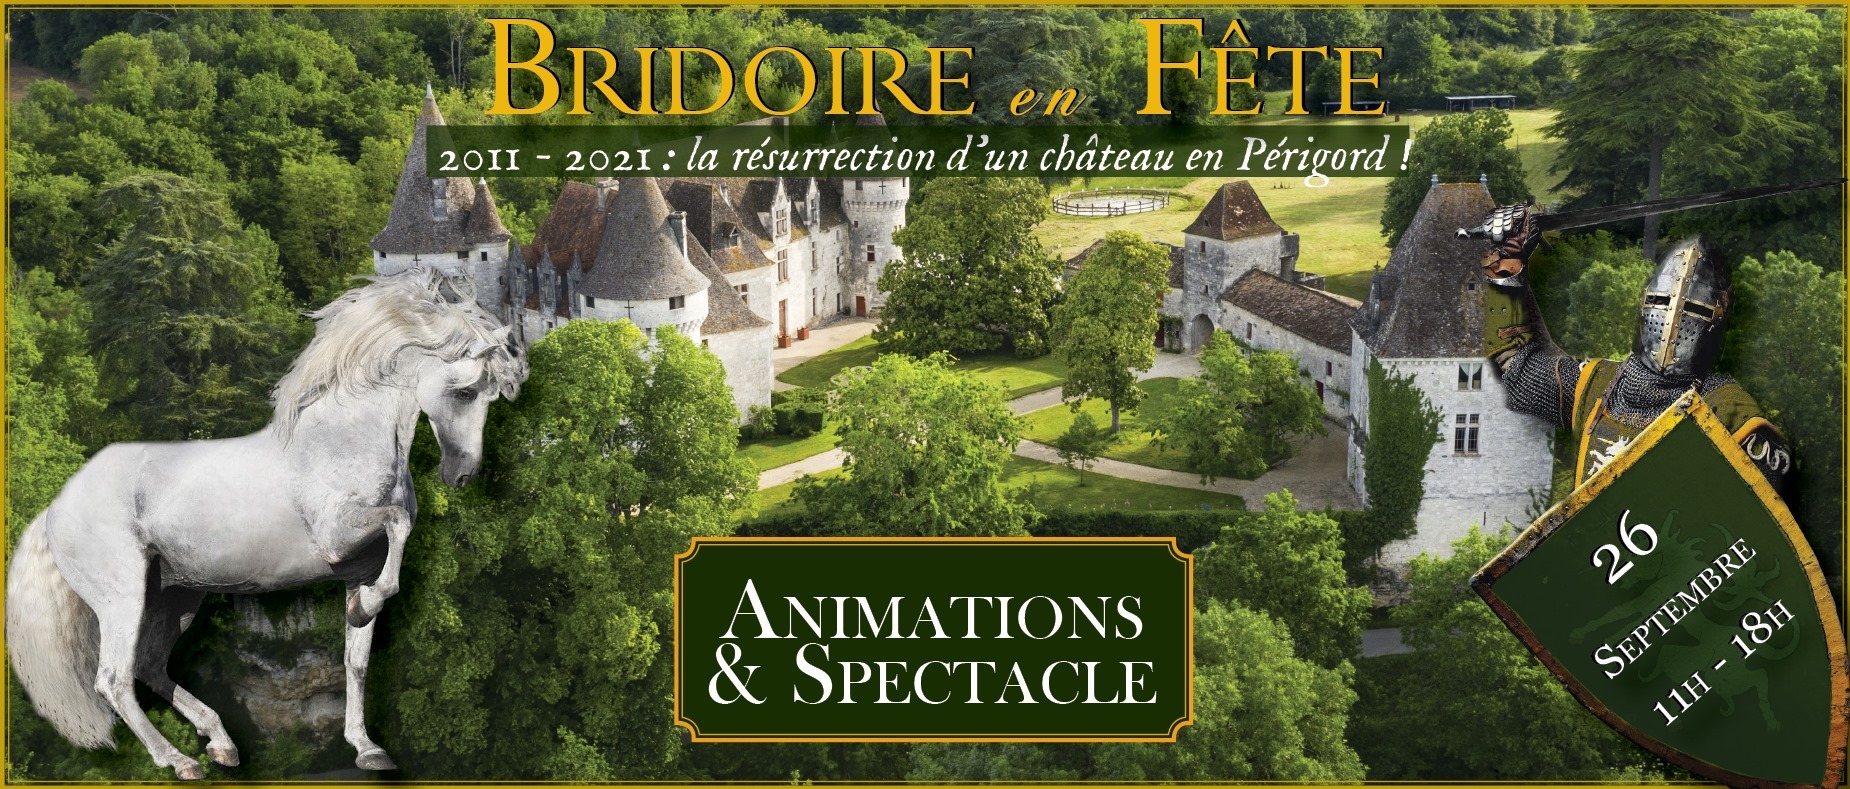 Best of Bergerac Agenda Château de Bridoire